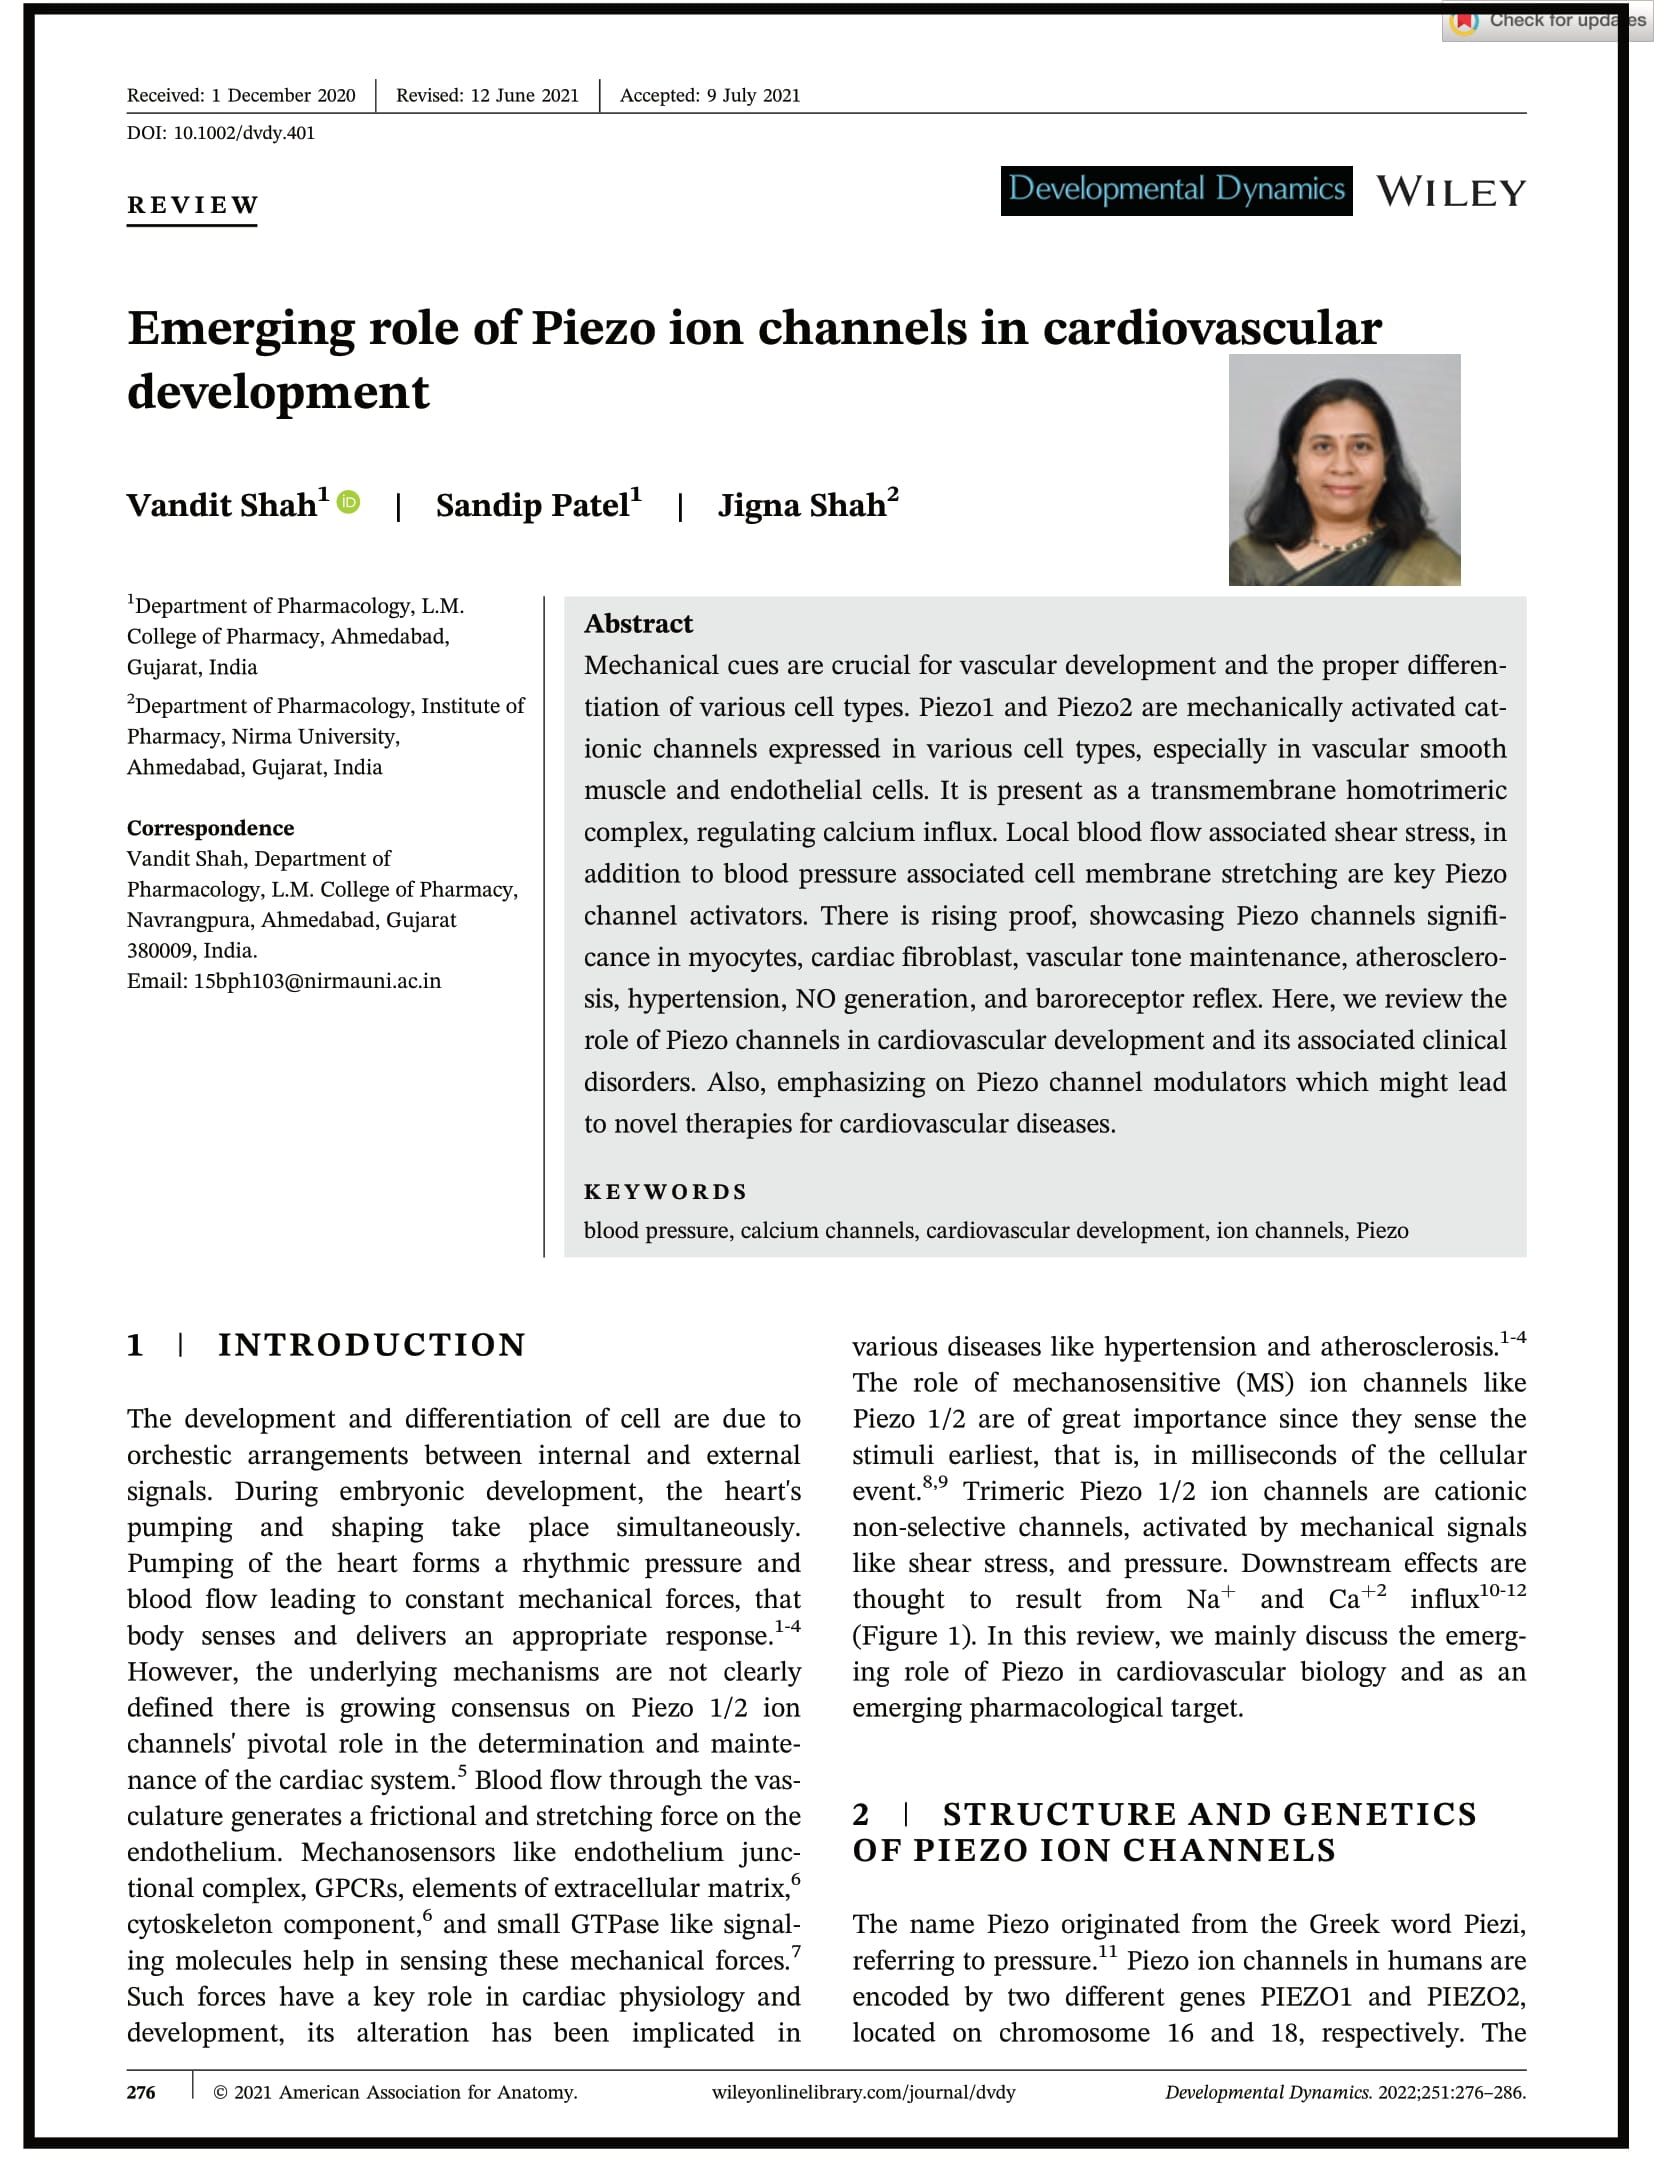 Emerging role of Piezo ion channels in cardiovascular development